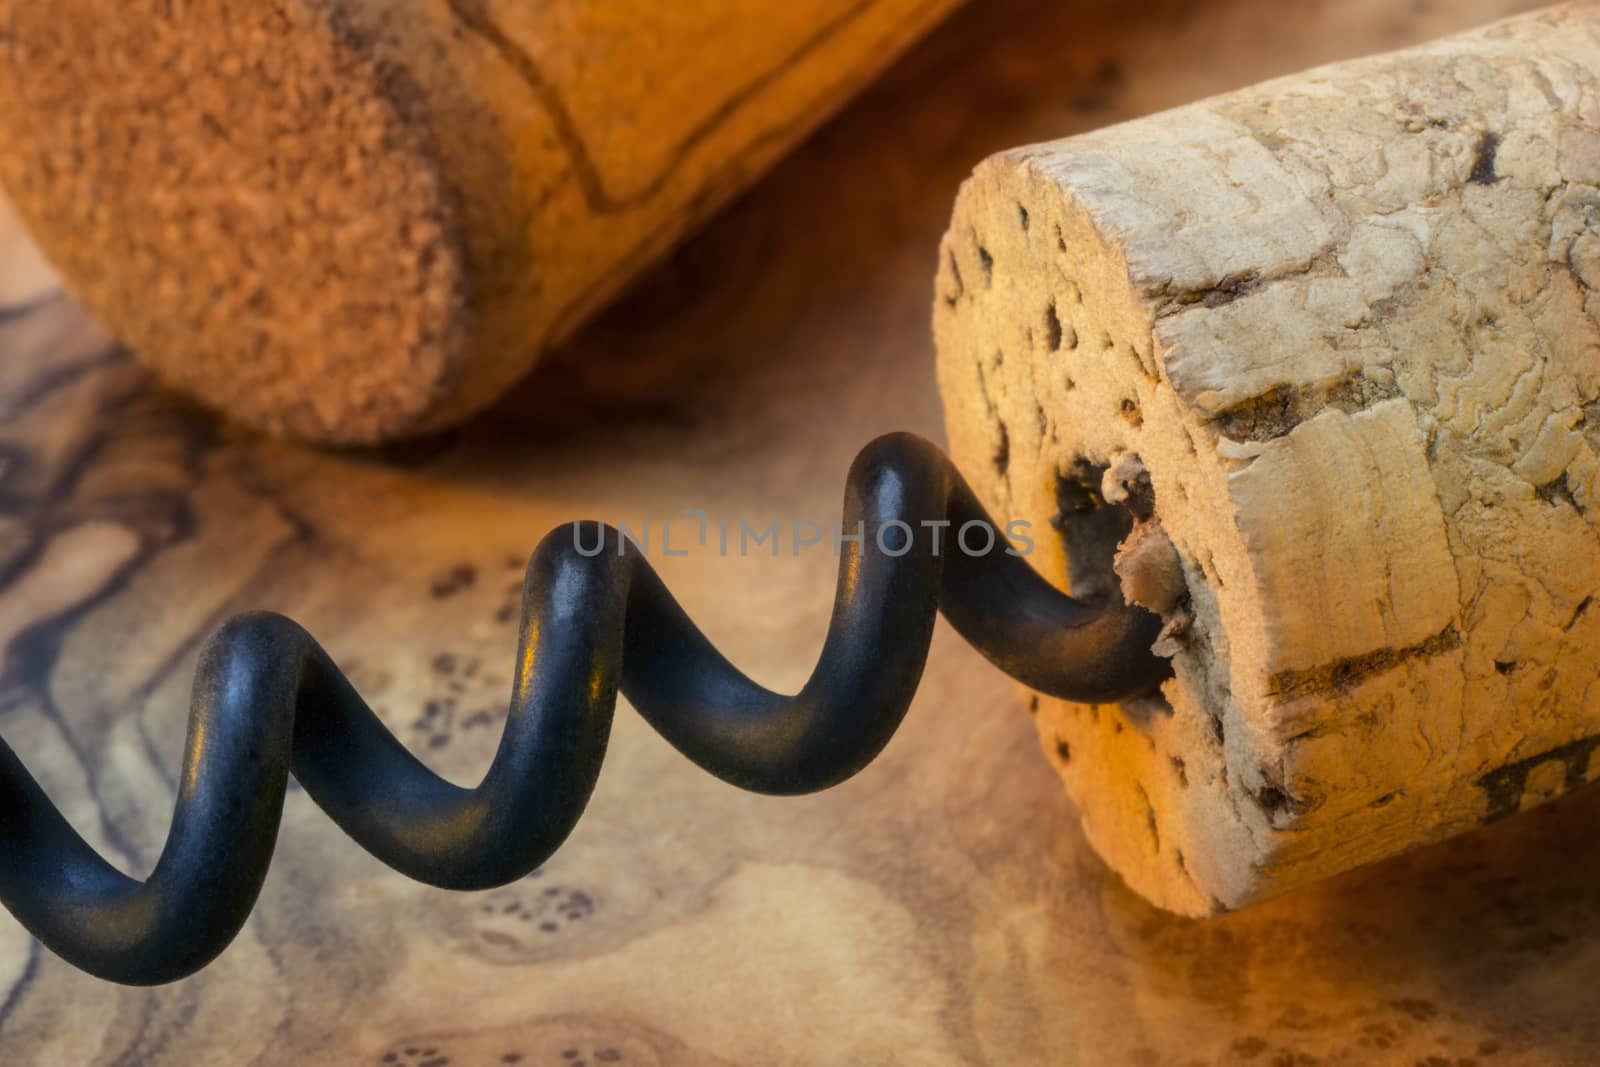 Pulling cork from a wine bottle using a corkscrew